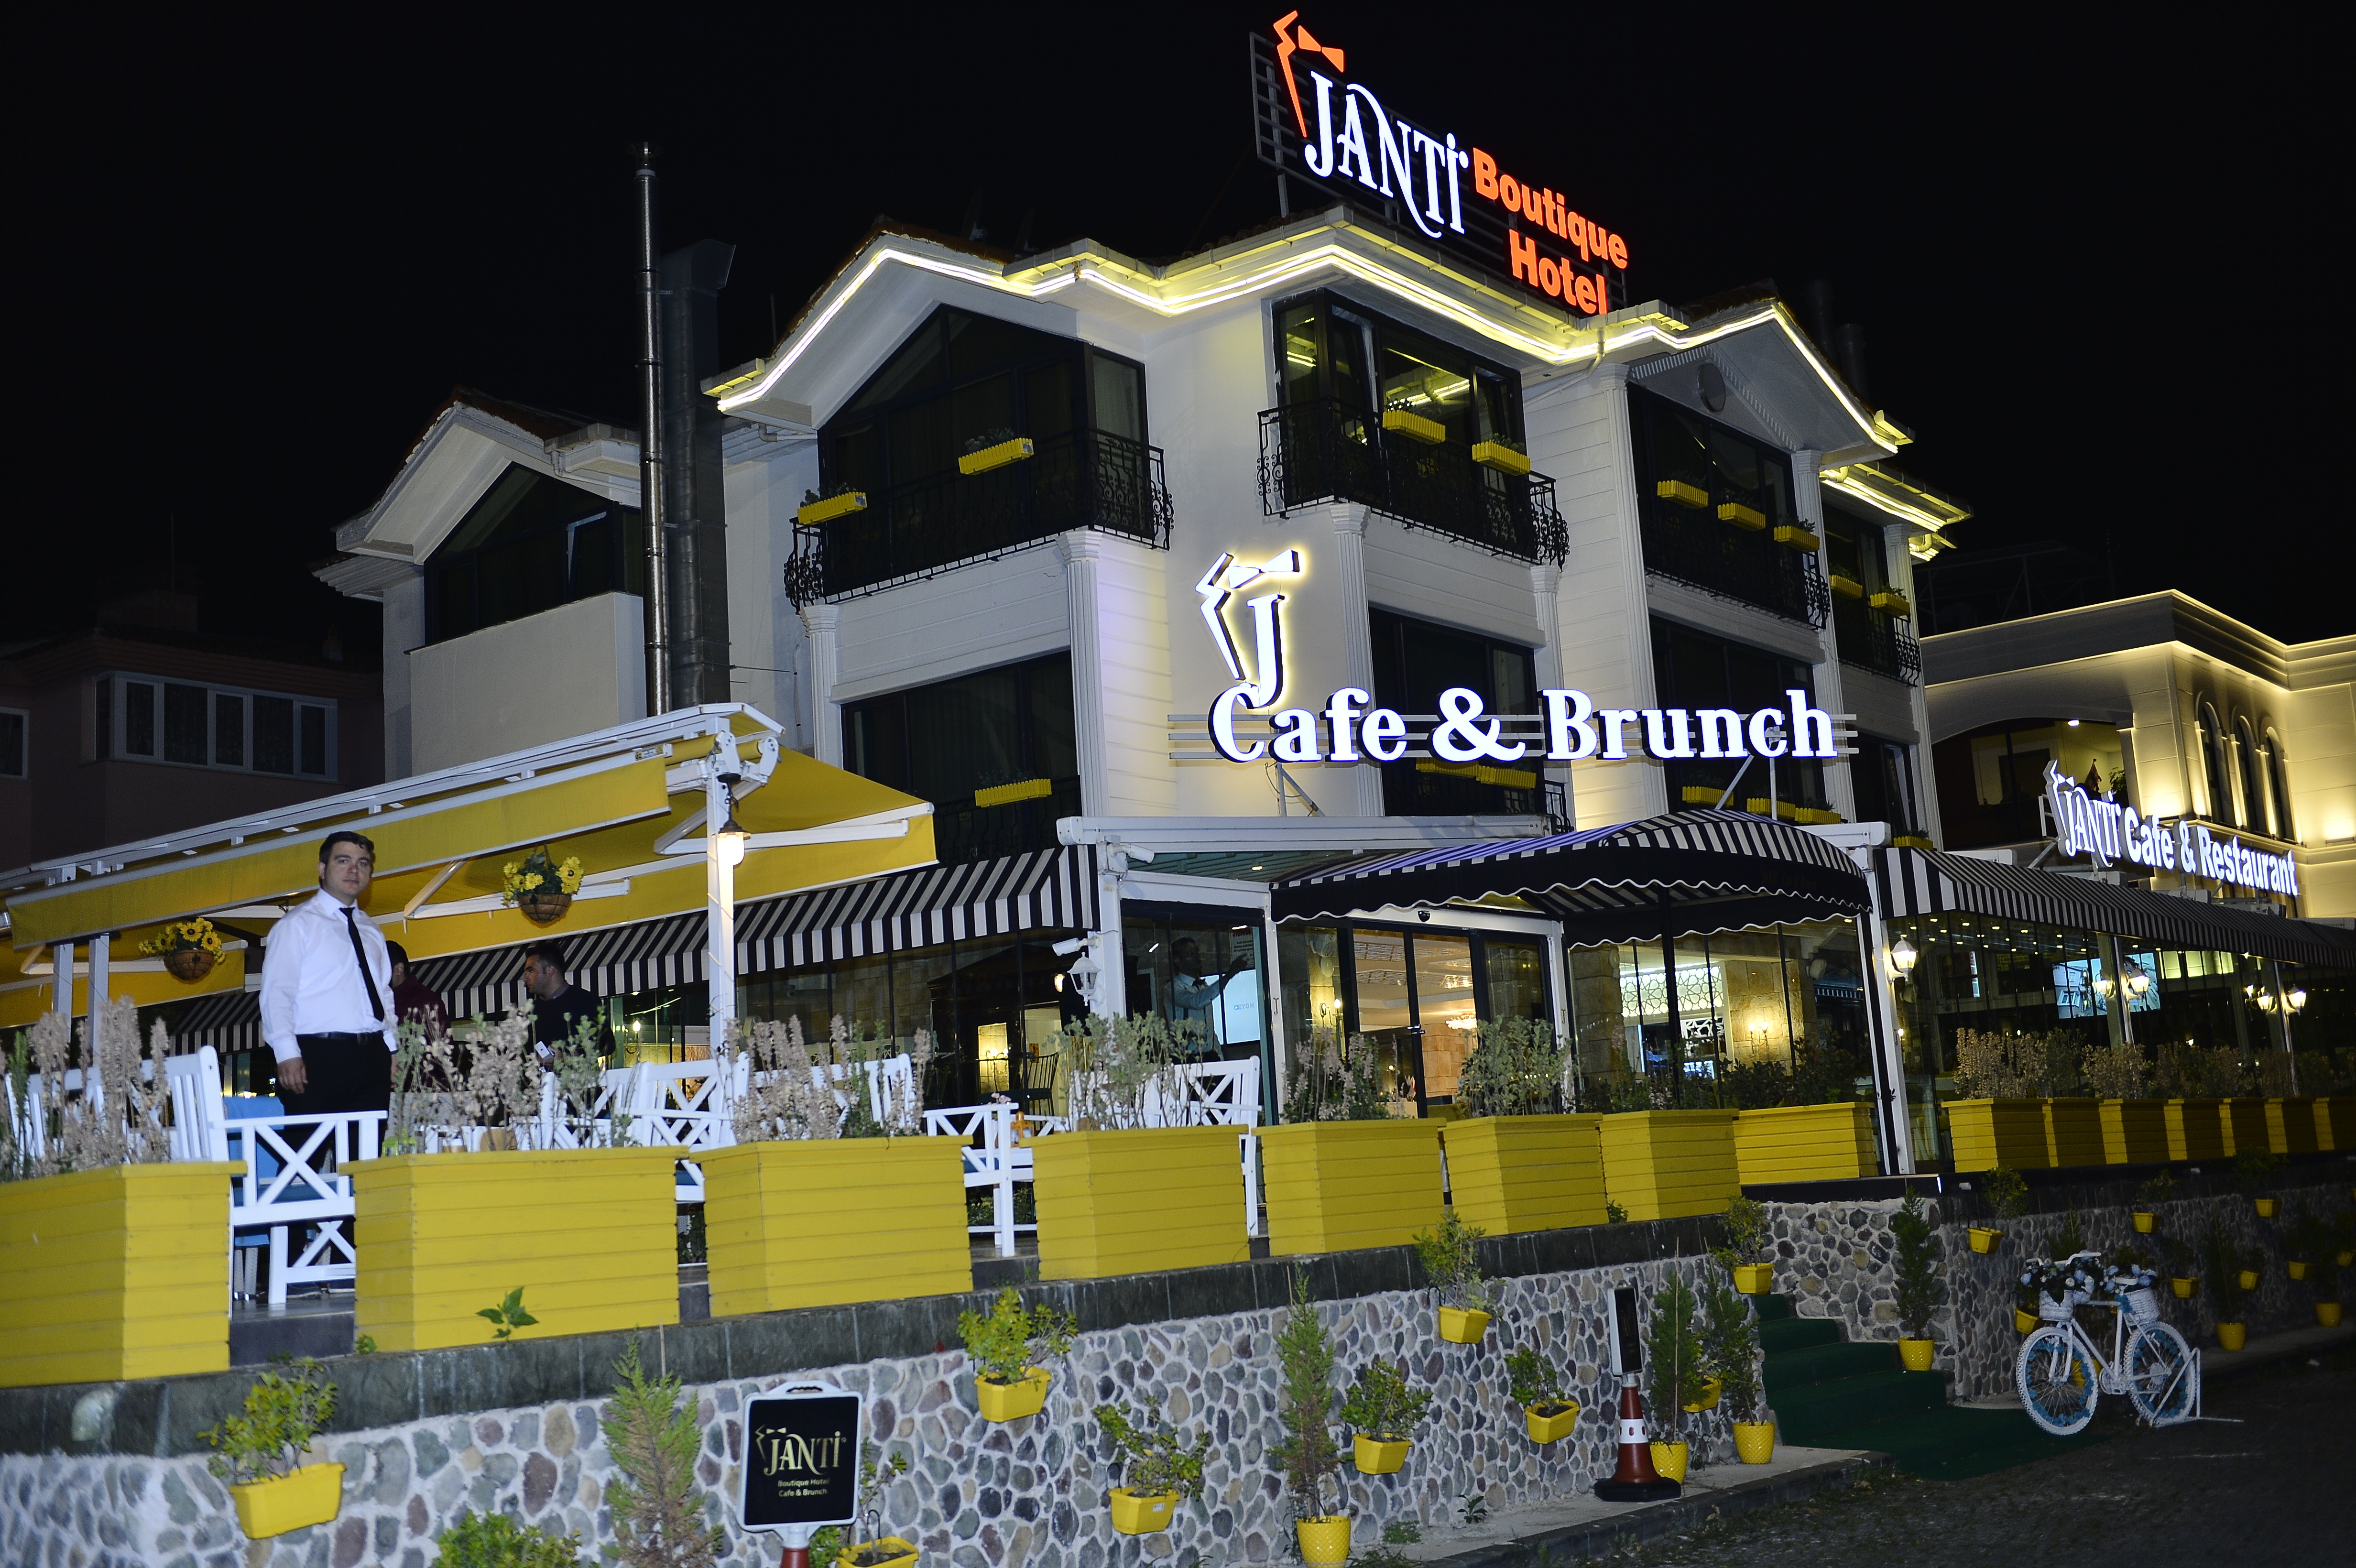 Janti Boutique Hotel